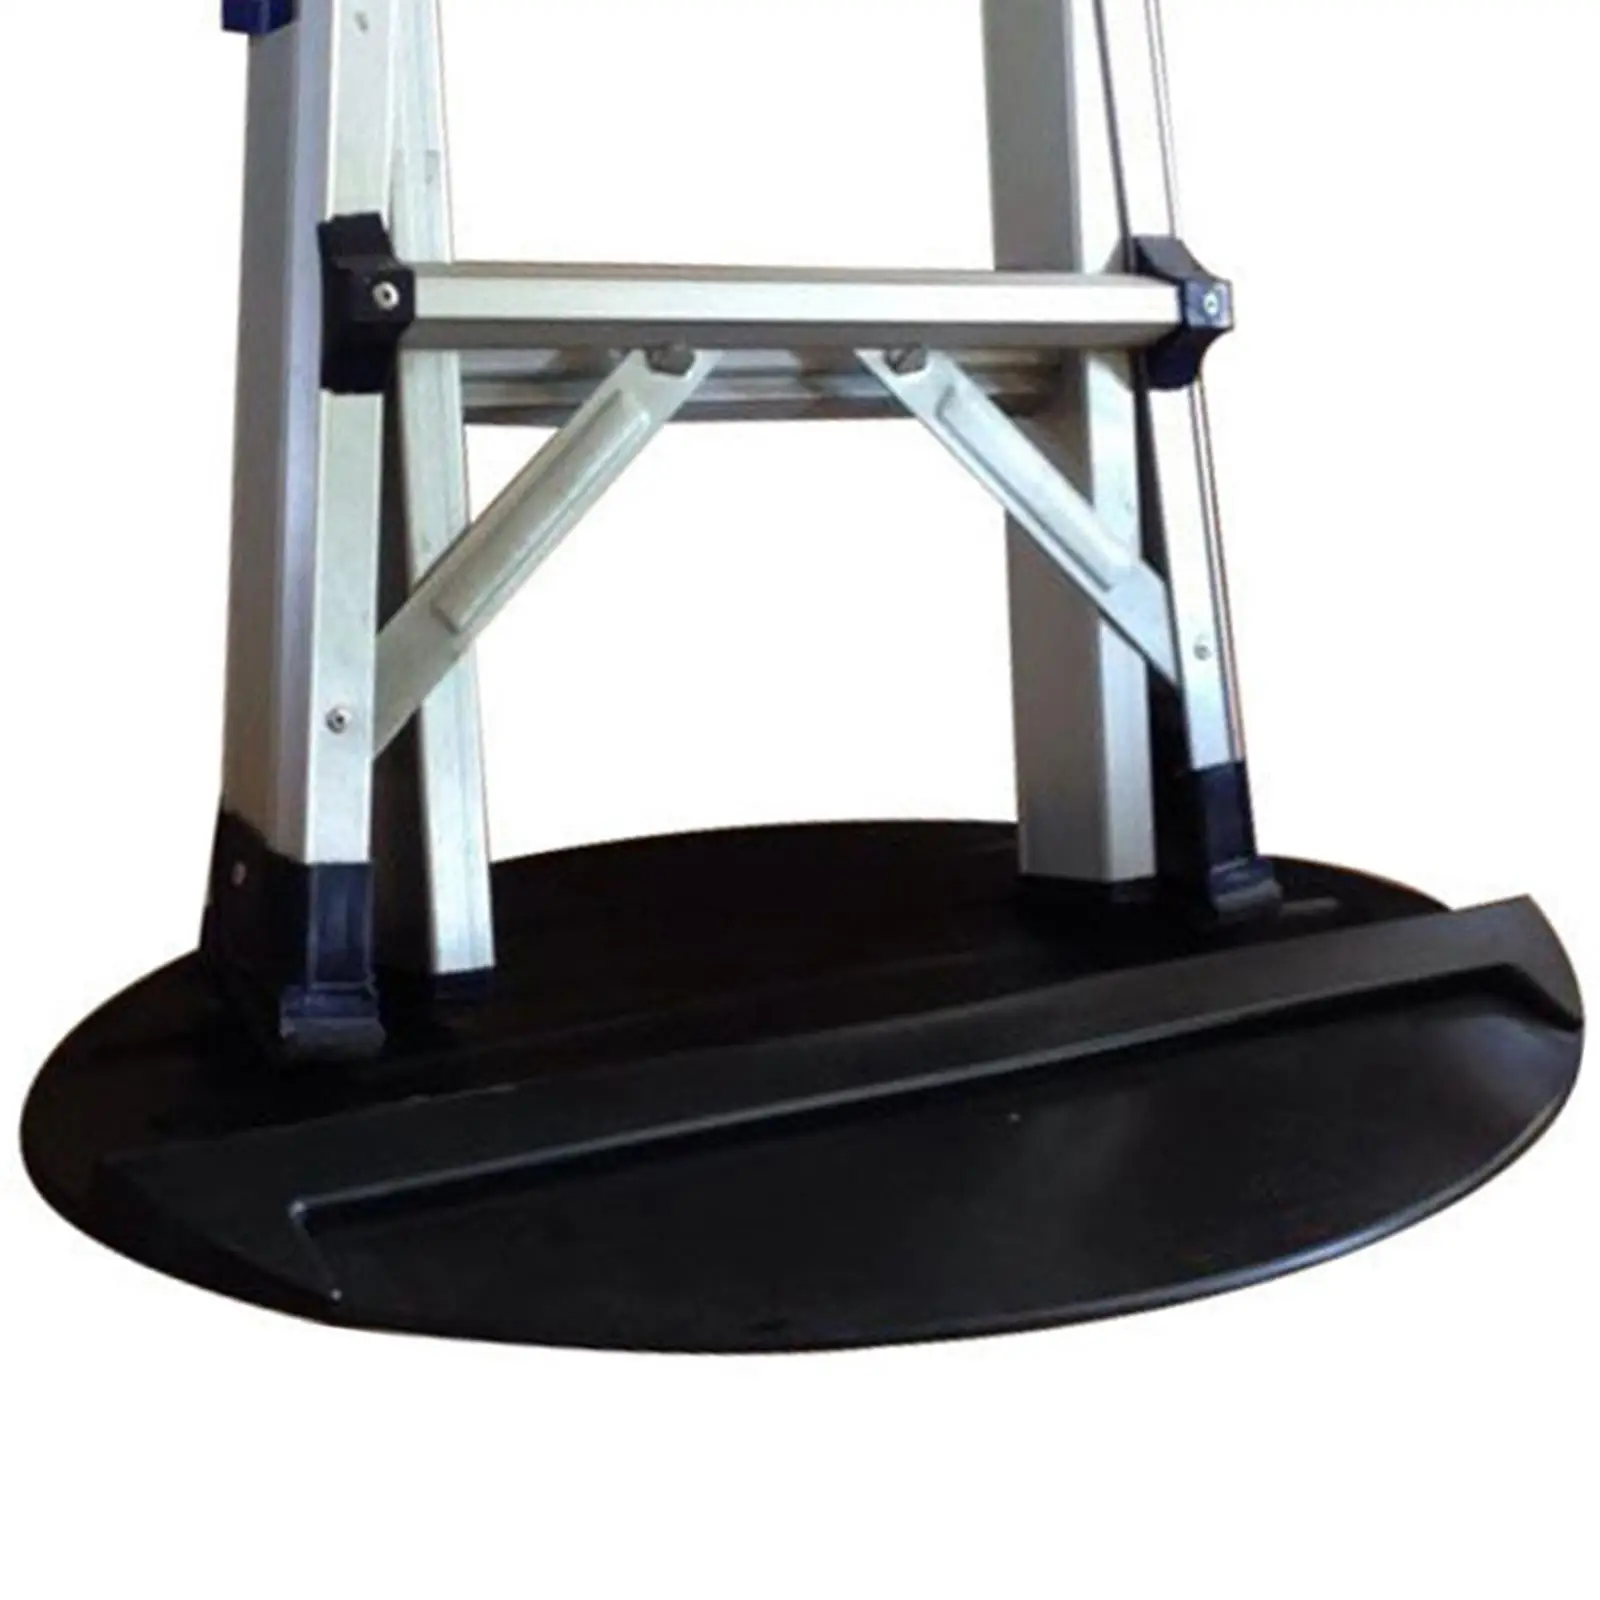 Extension Ladder Mat Non Slip Rubber Lightweight Black Color Practical